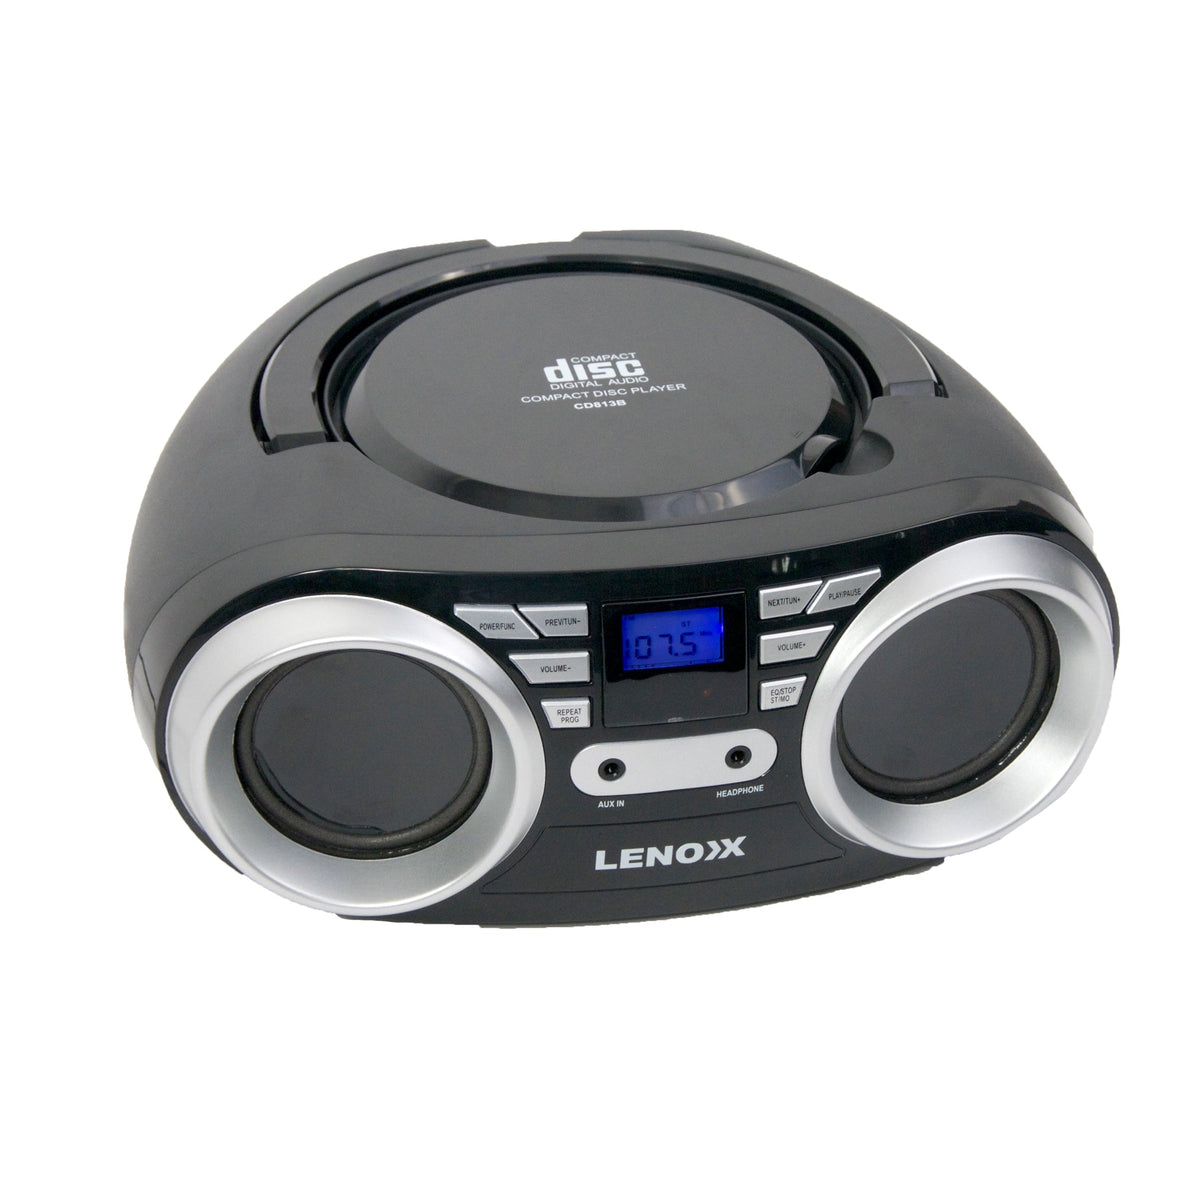 Black portable CD Player with AM/FM Radio.